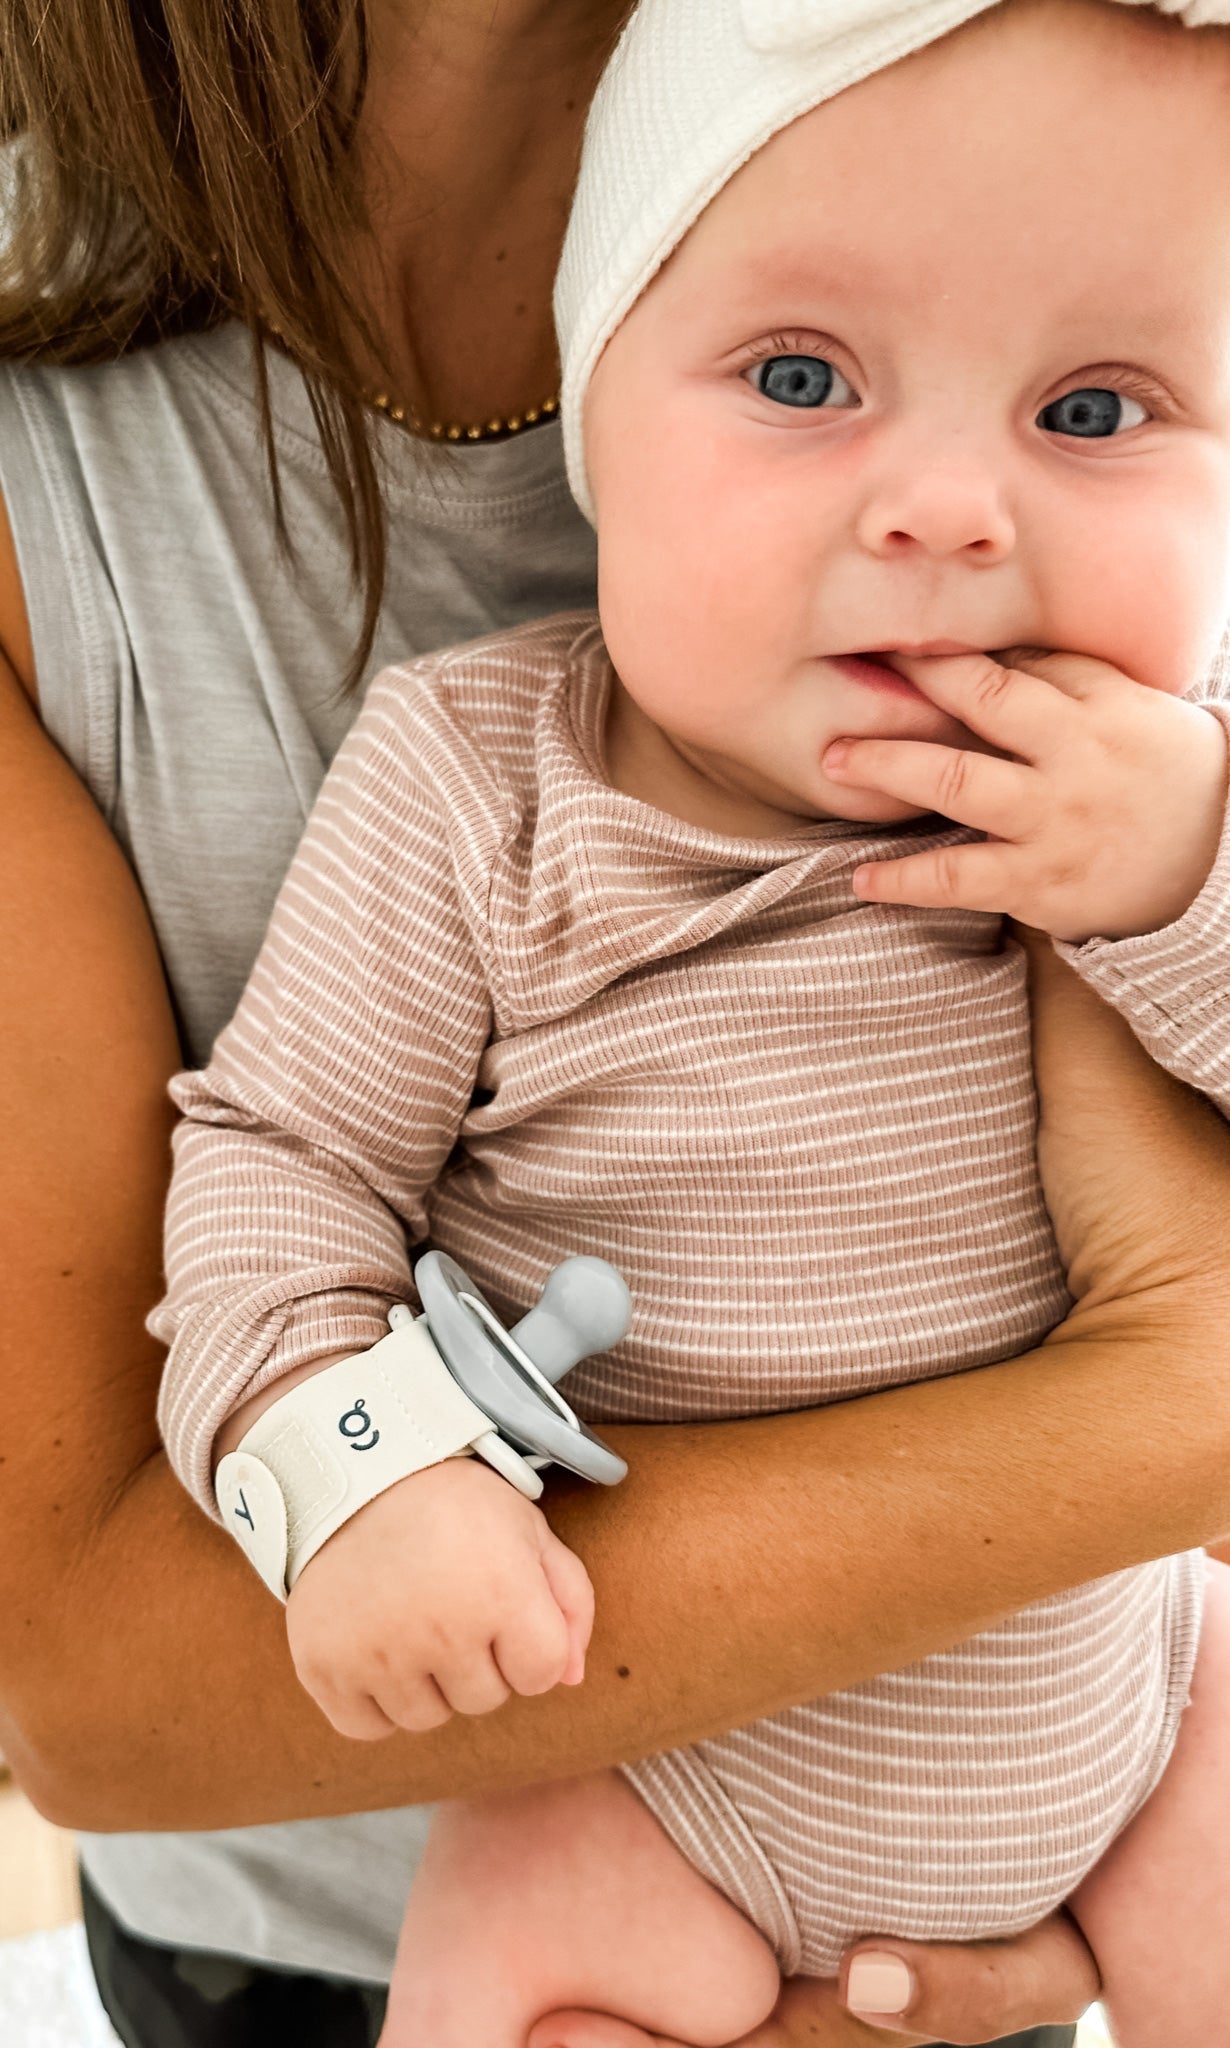 How Do Pacifiers Help Babies?